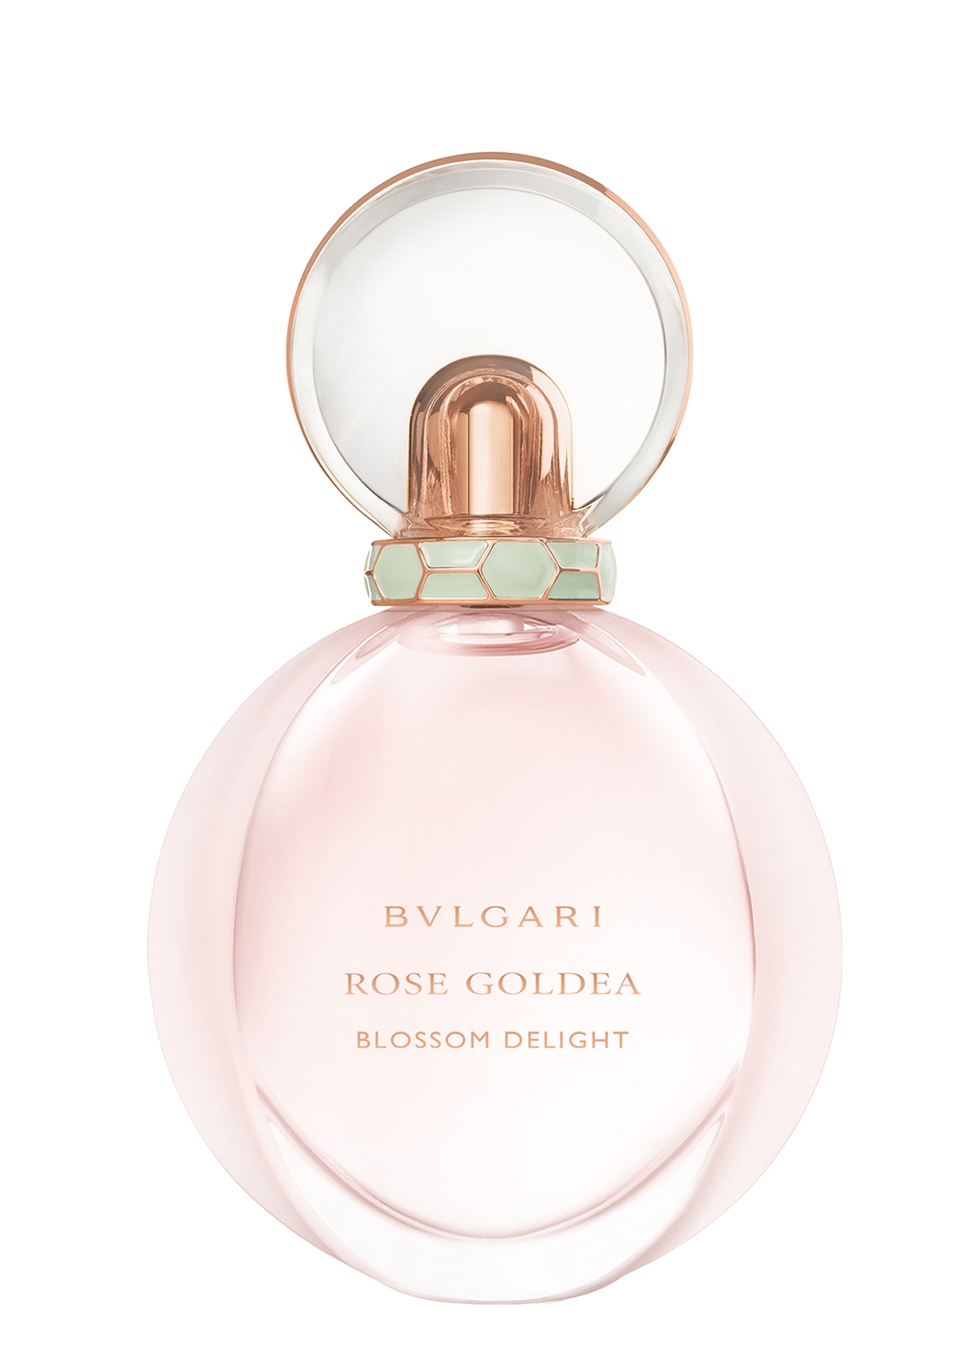 BVLGARI Rose Goldea Blossom Delight Eau De Parfum Floral Rose White Musk Feminine Scent